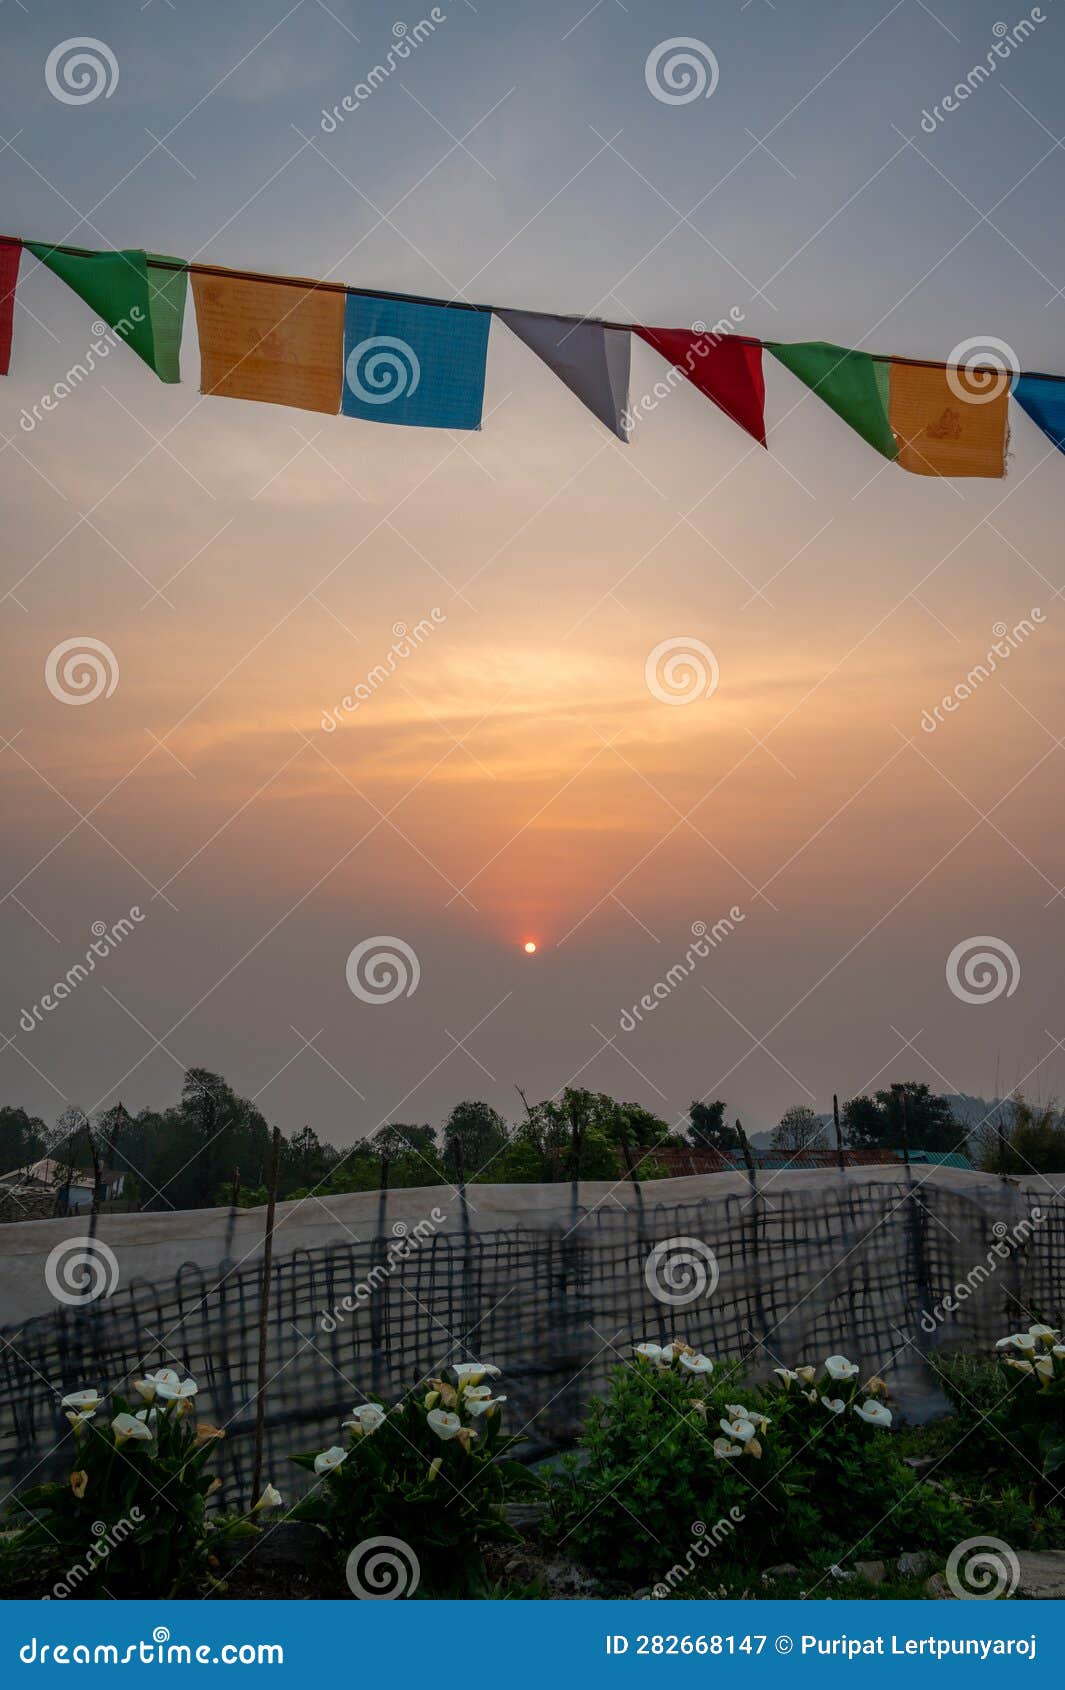 The Australian Camp, Pokhara, Nepal Stock Image - Image of outdoor ...